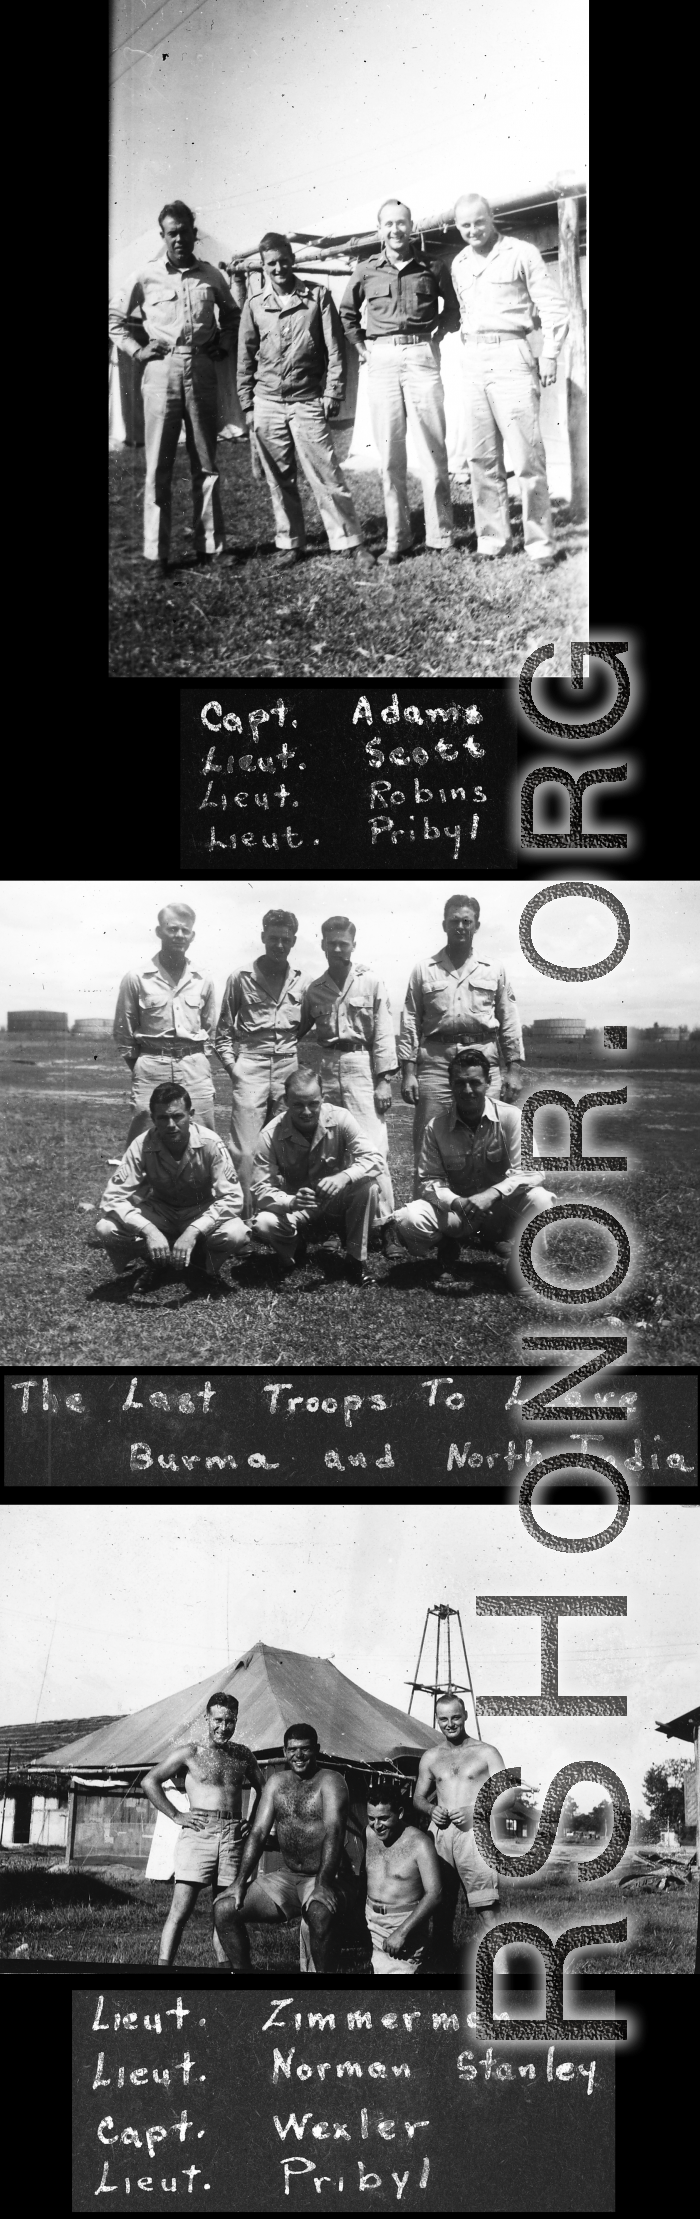 "The last troops to leave Burma and North India."  Top image: Capt. Adams, Lt. Scott, Lt. Robins, and Lt. Pribyl.  Bottom image: Lt. Zimmerman, Lt. Norman Stanley, Capt. Wexler, and Lt. Pribyl.